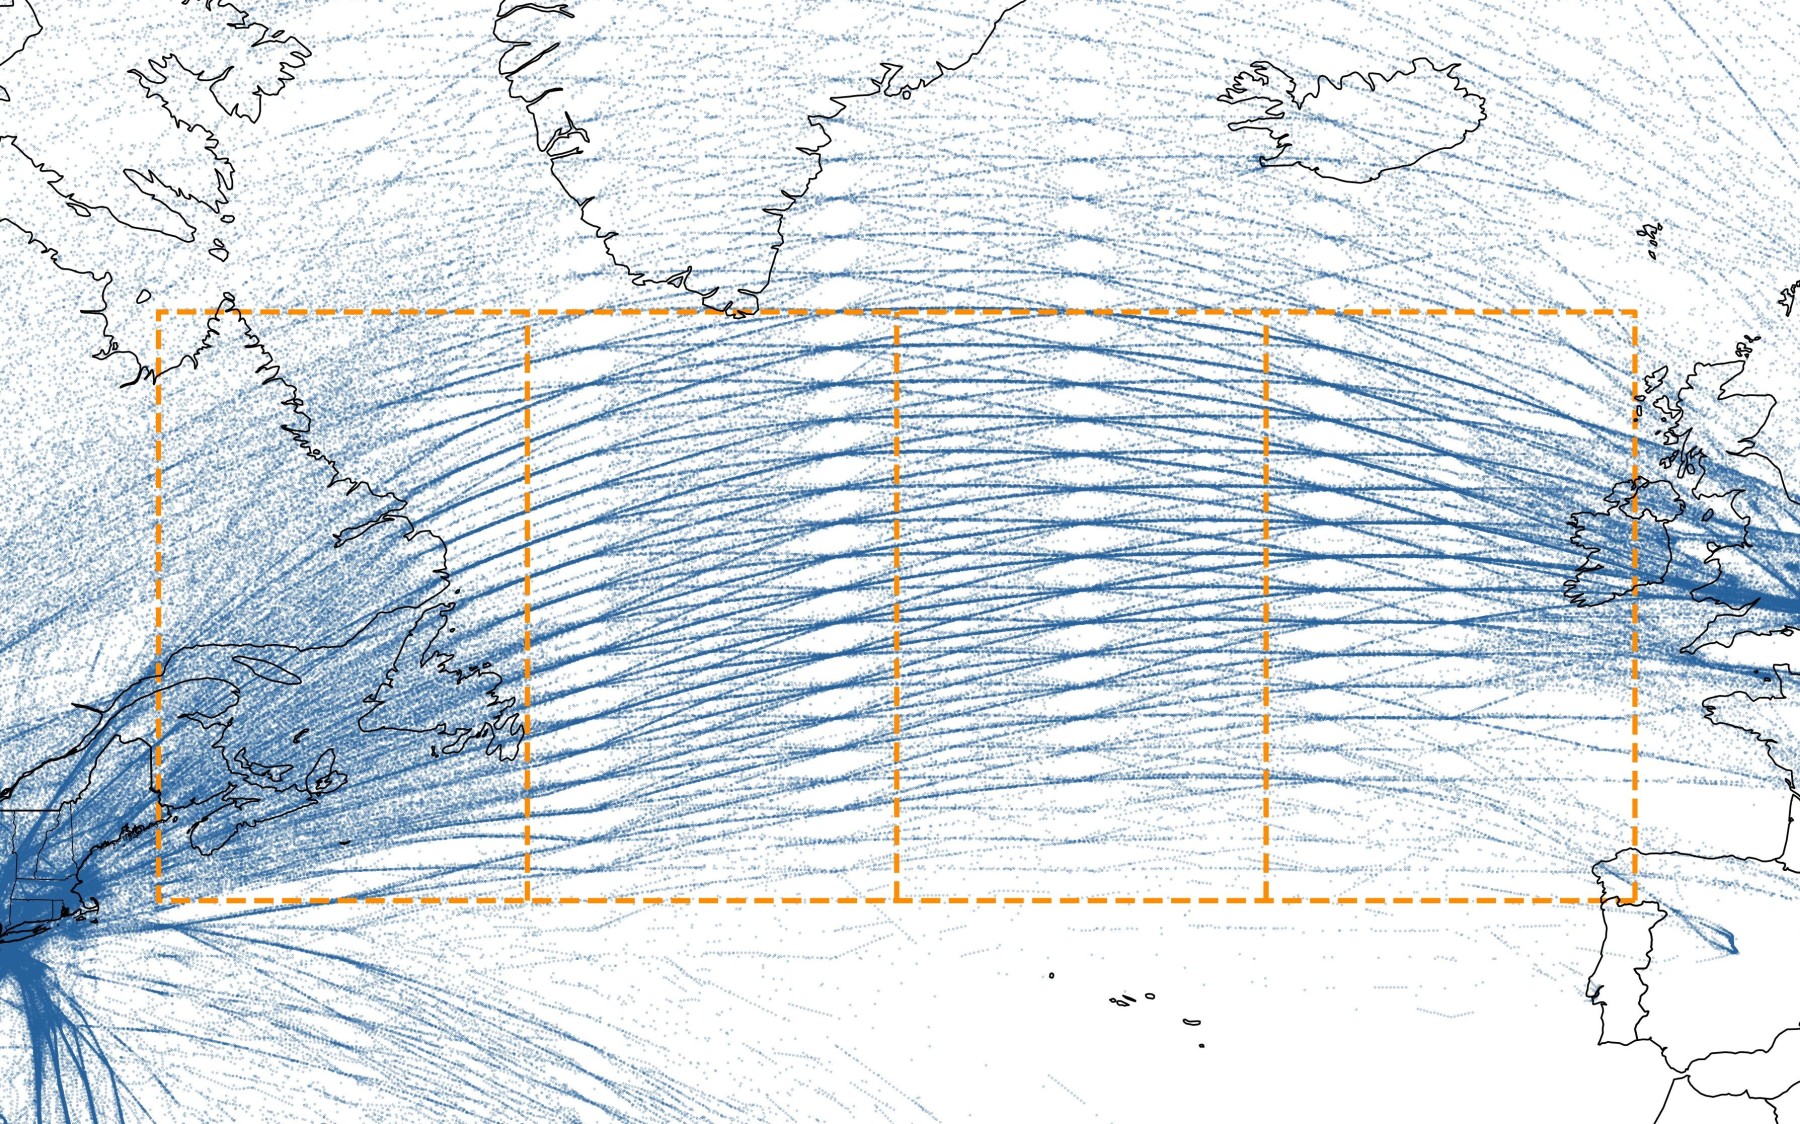 amdar turbulence measurements in 2021 over the north atlantic